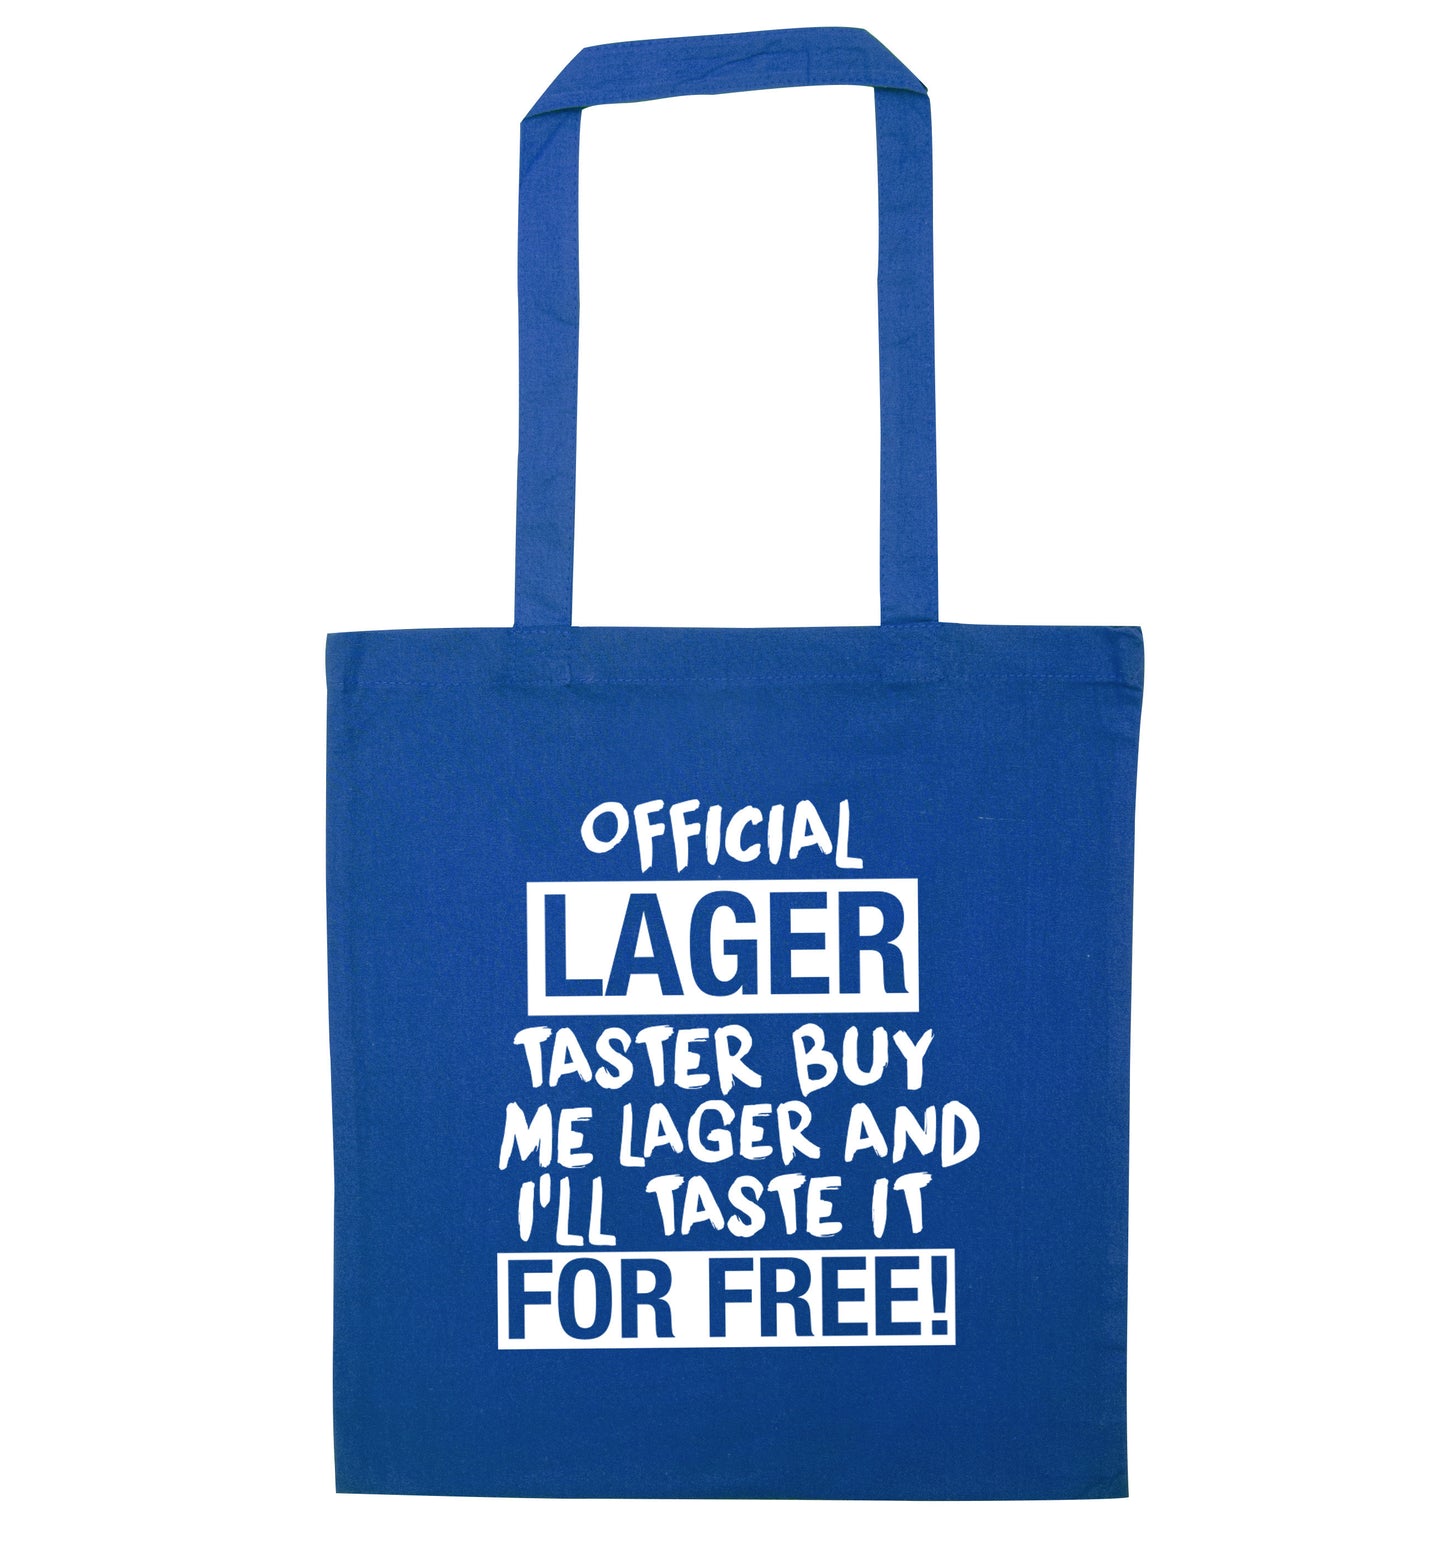 Official lager taster buy me lager and I'll taste it for free! blue tote bag